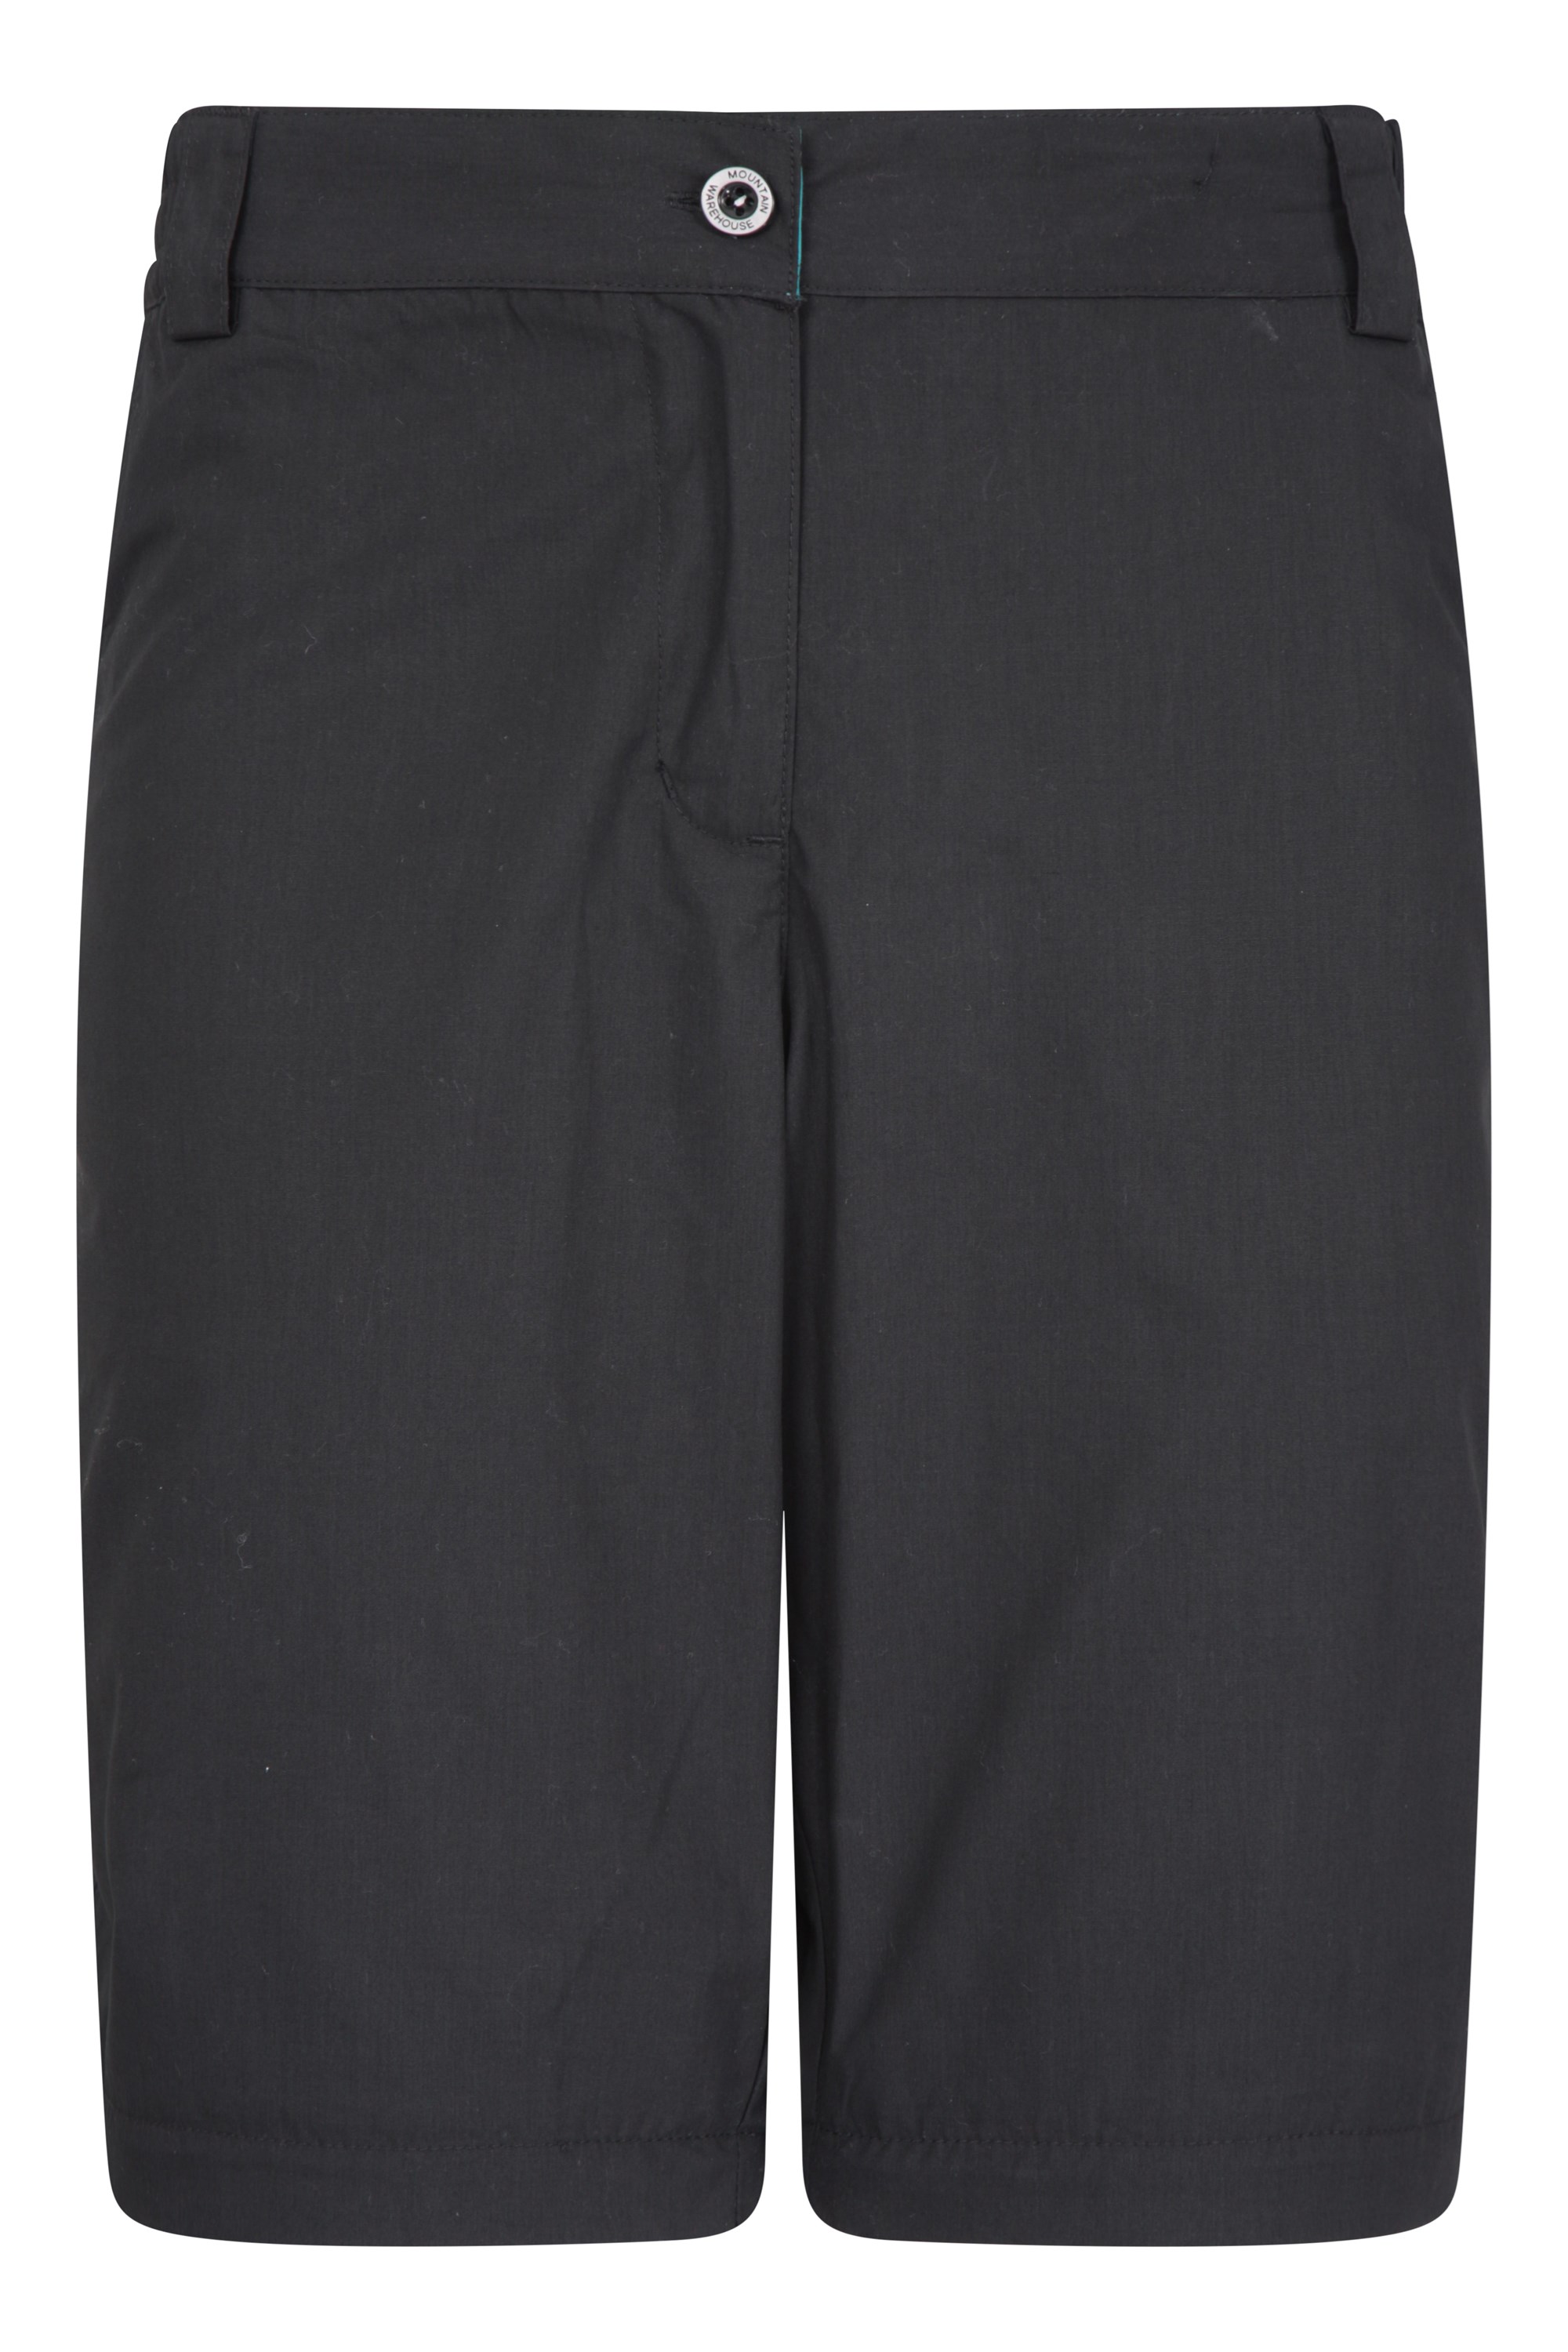 Mountain Warehouse Wms Quest Womens Zip-Off Short Trouser Zip-Off Trousers 